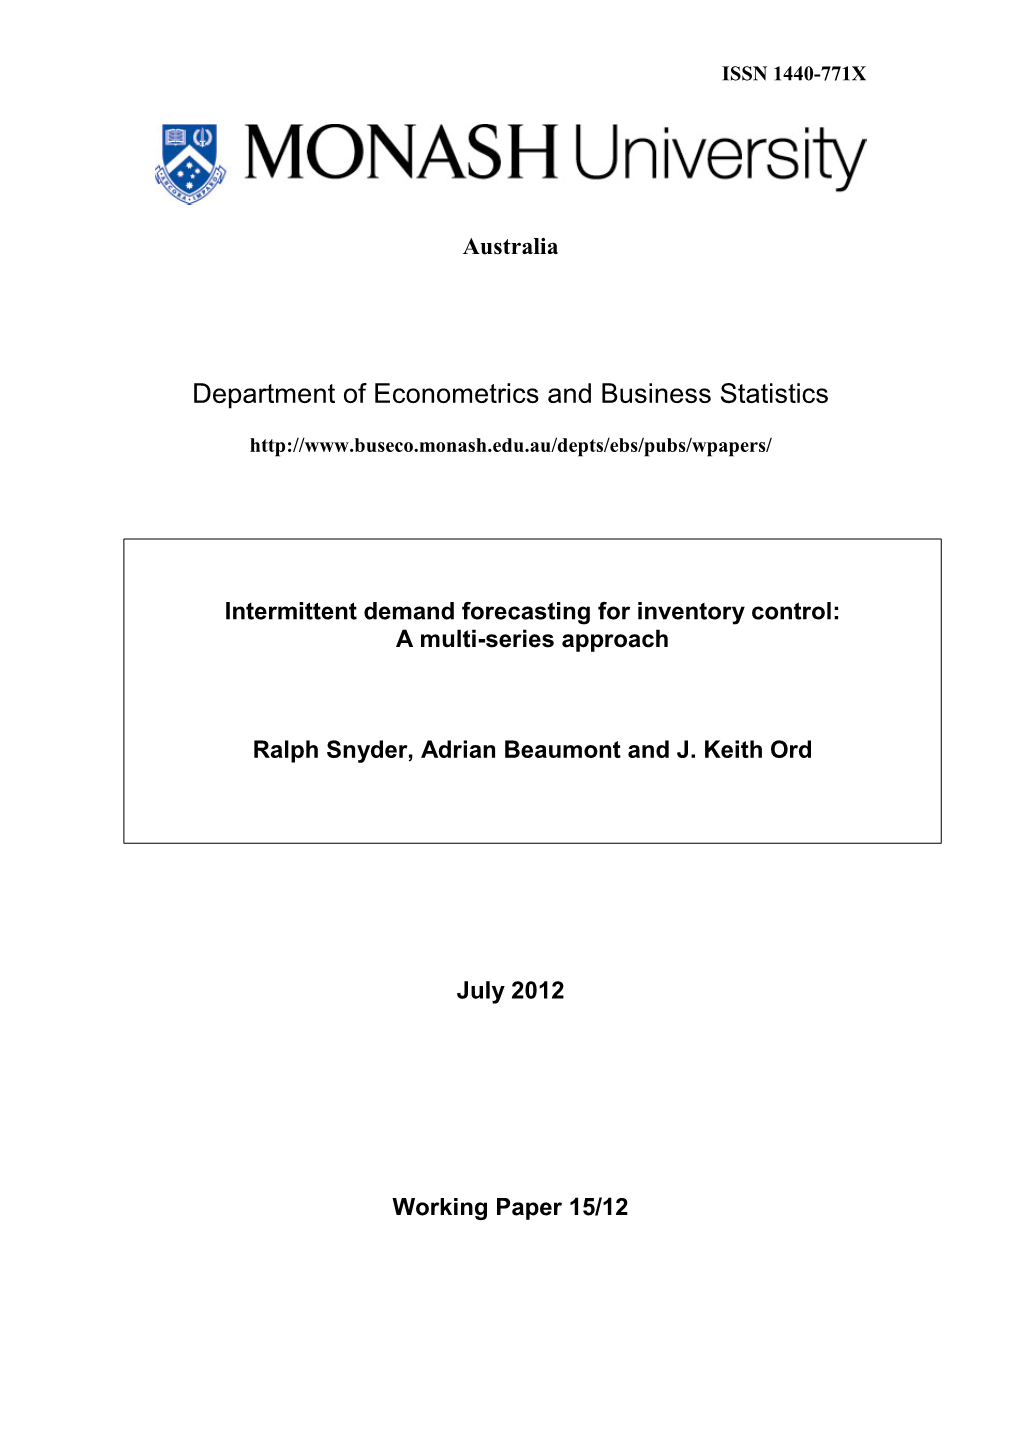 Department of Econometrics and Business Statistics